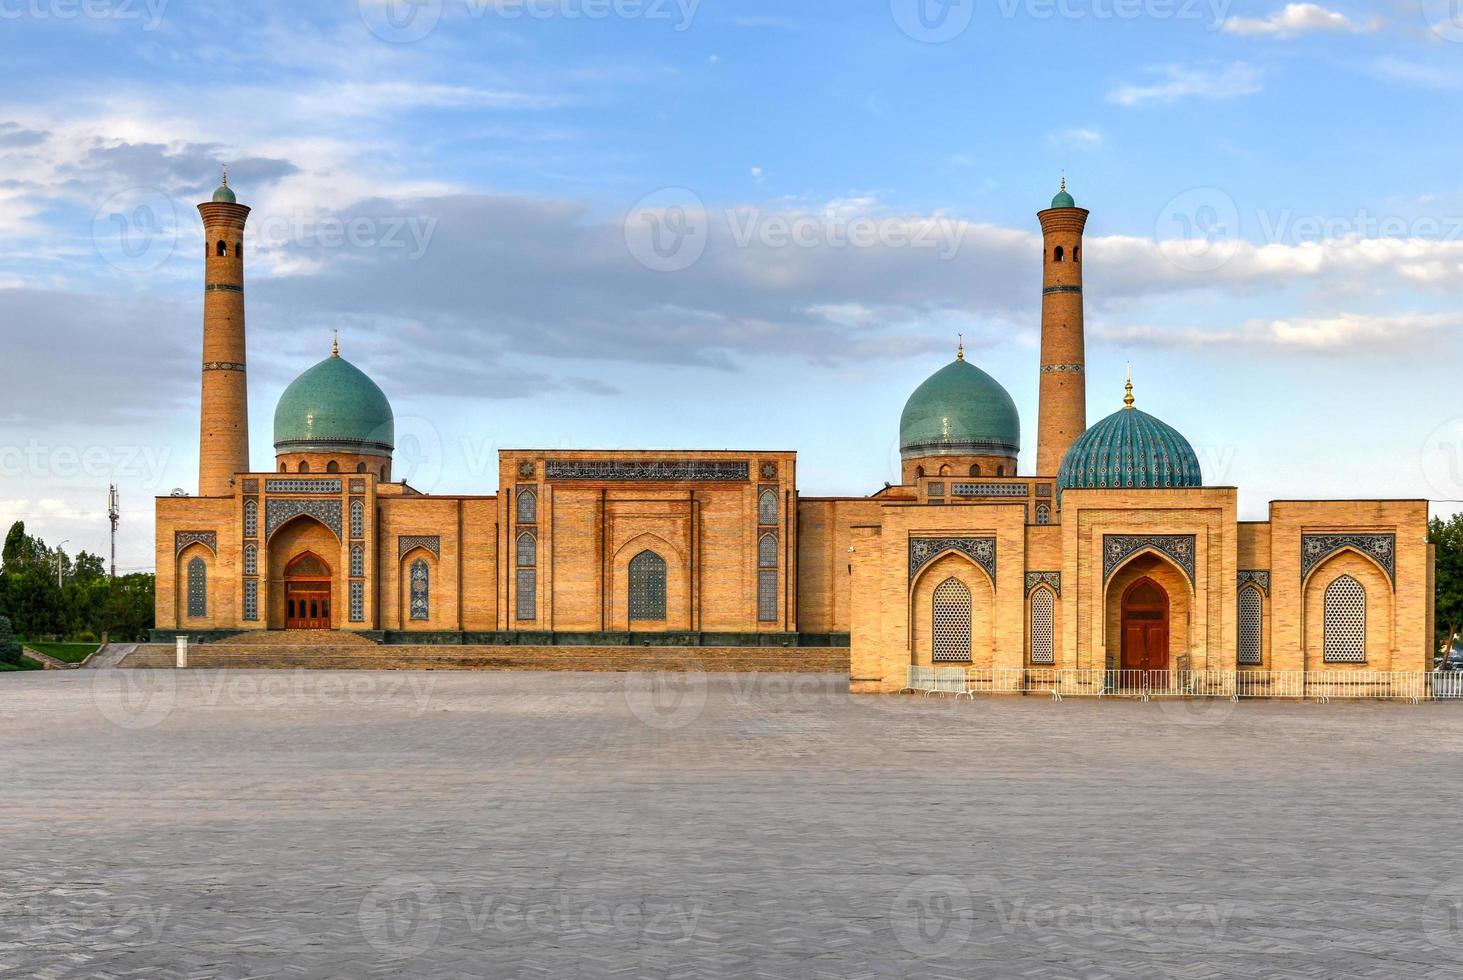 vista do complexo tashkent hazrati imam barakhan madrasa em tashkent, uzbequistão. foto